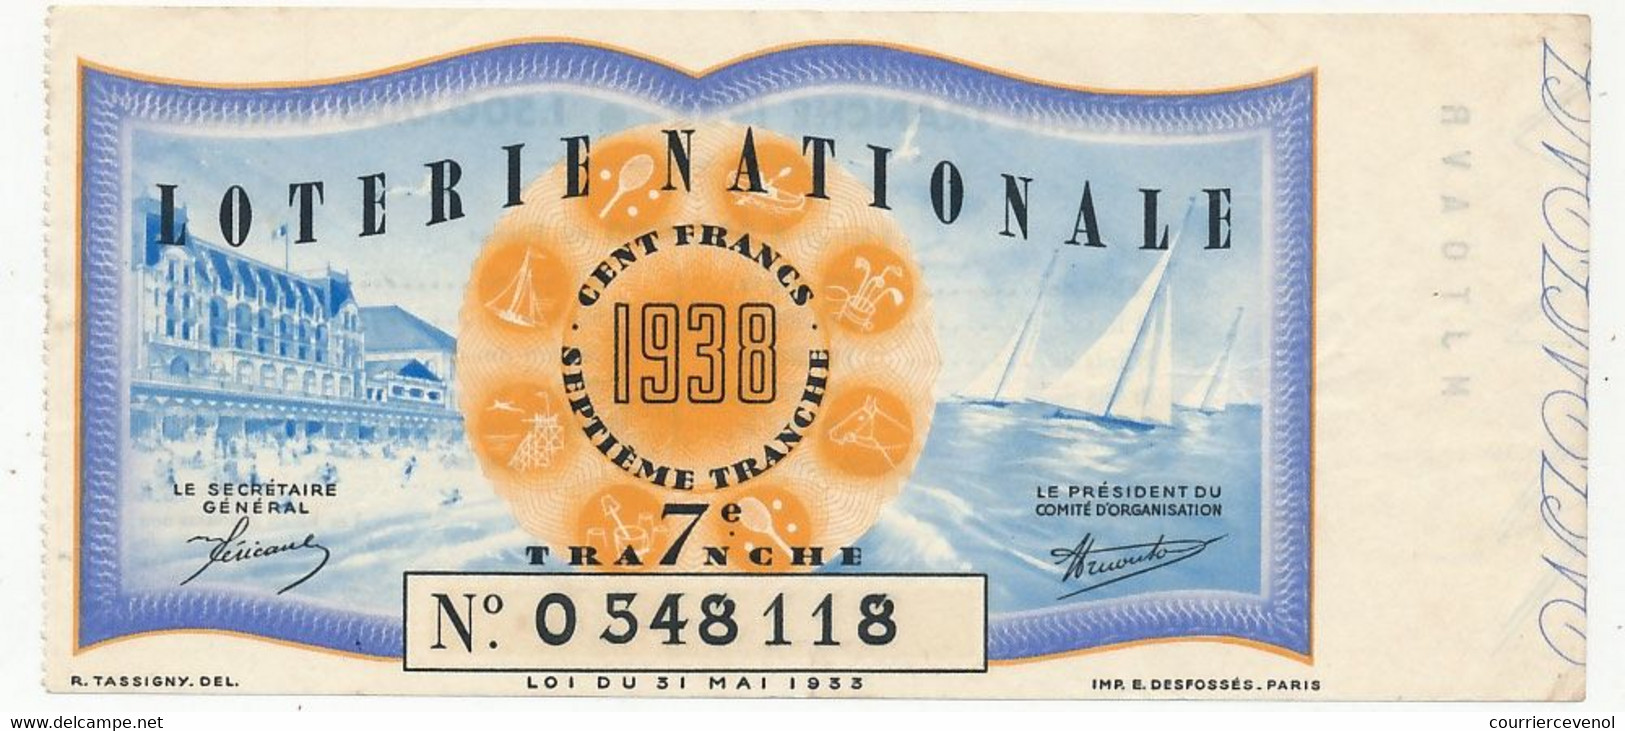 FRANCE - Loterie Nationale - Billet Entier - 7eme Tranche 1938 (Illustration Bord De Mer) - Loterijbiljetten